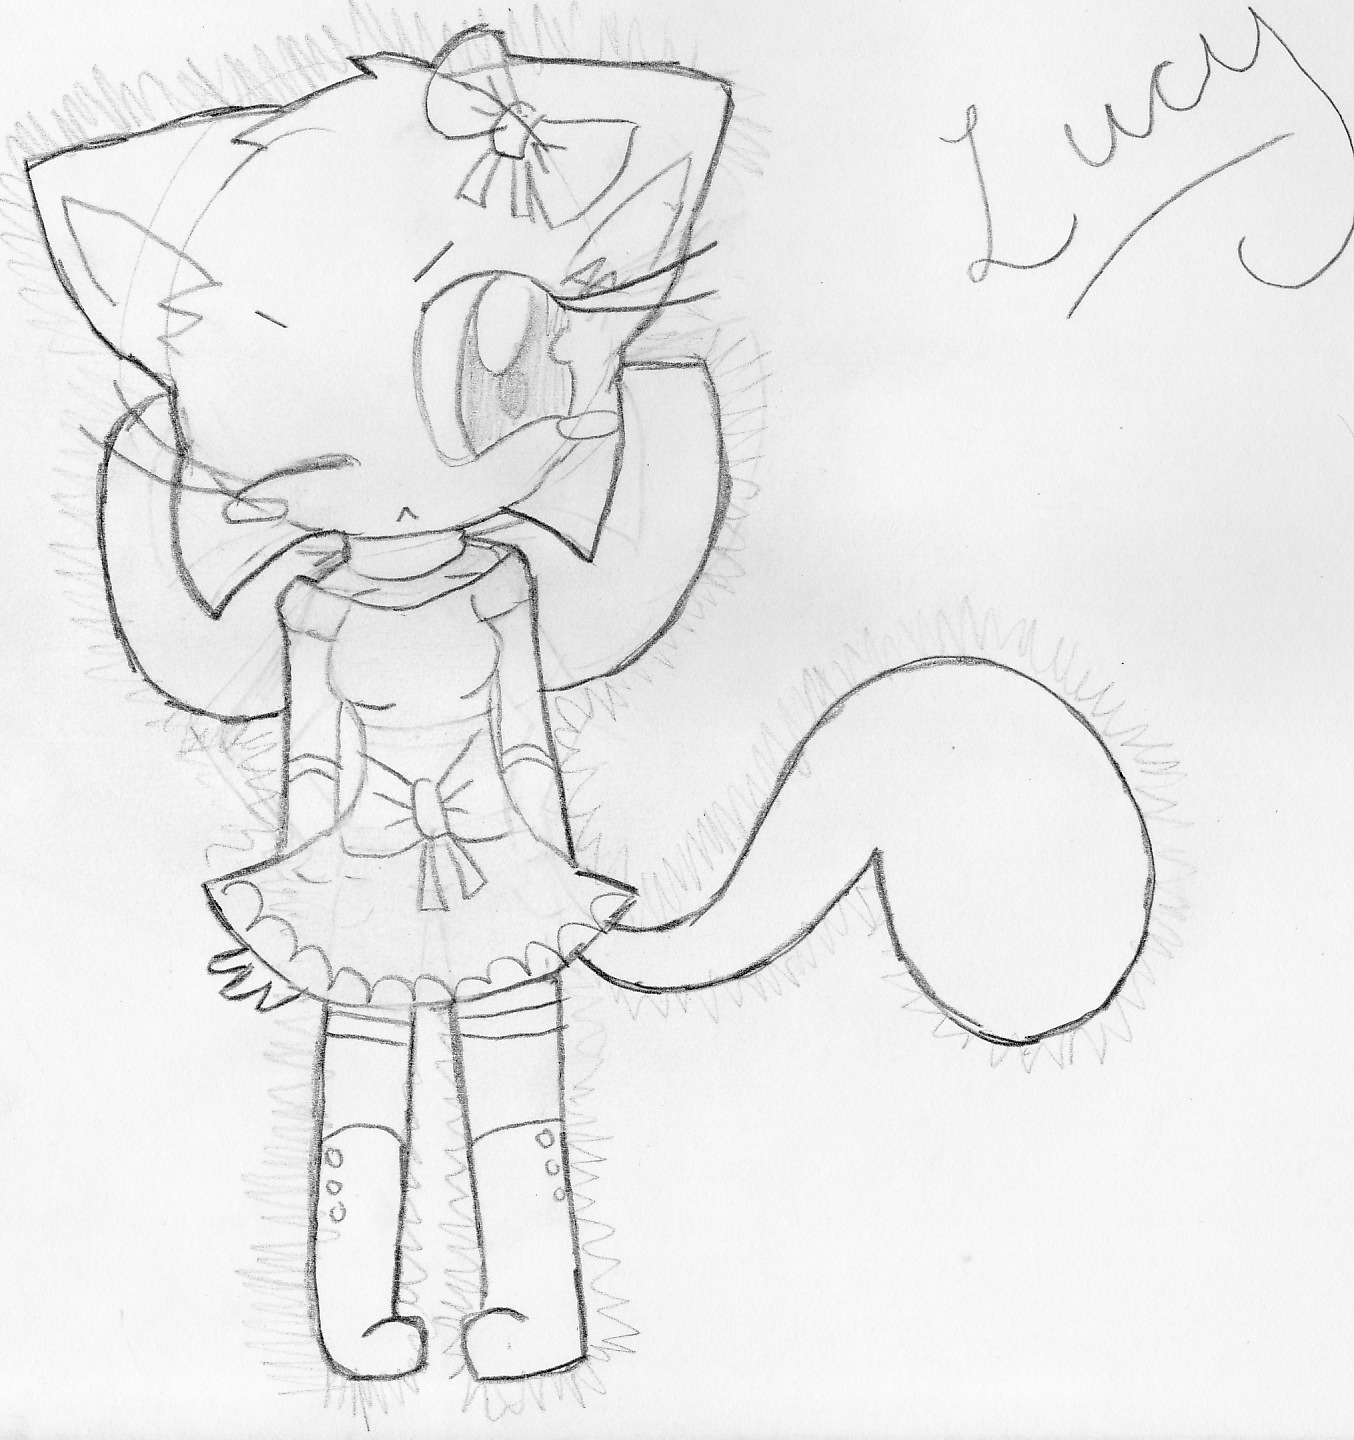 Candybooru image #5820, tagged with Carathehedgehog_(Artist) Lucy sketch